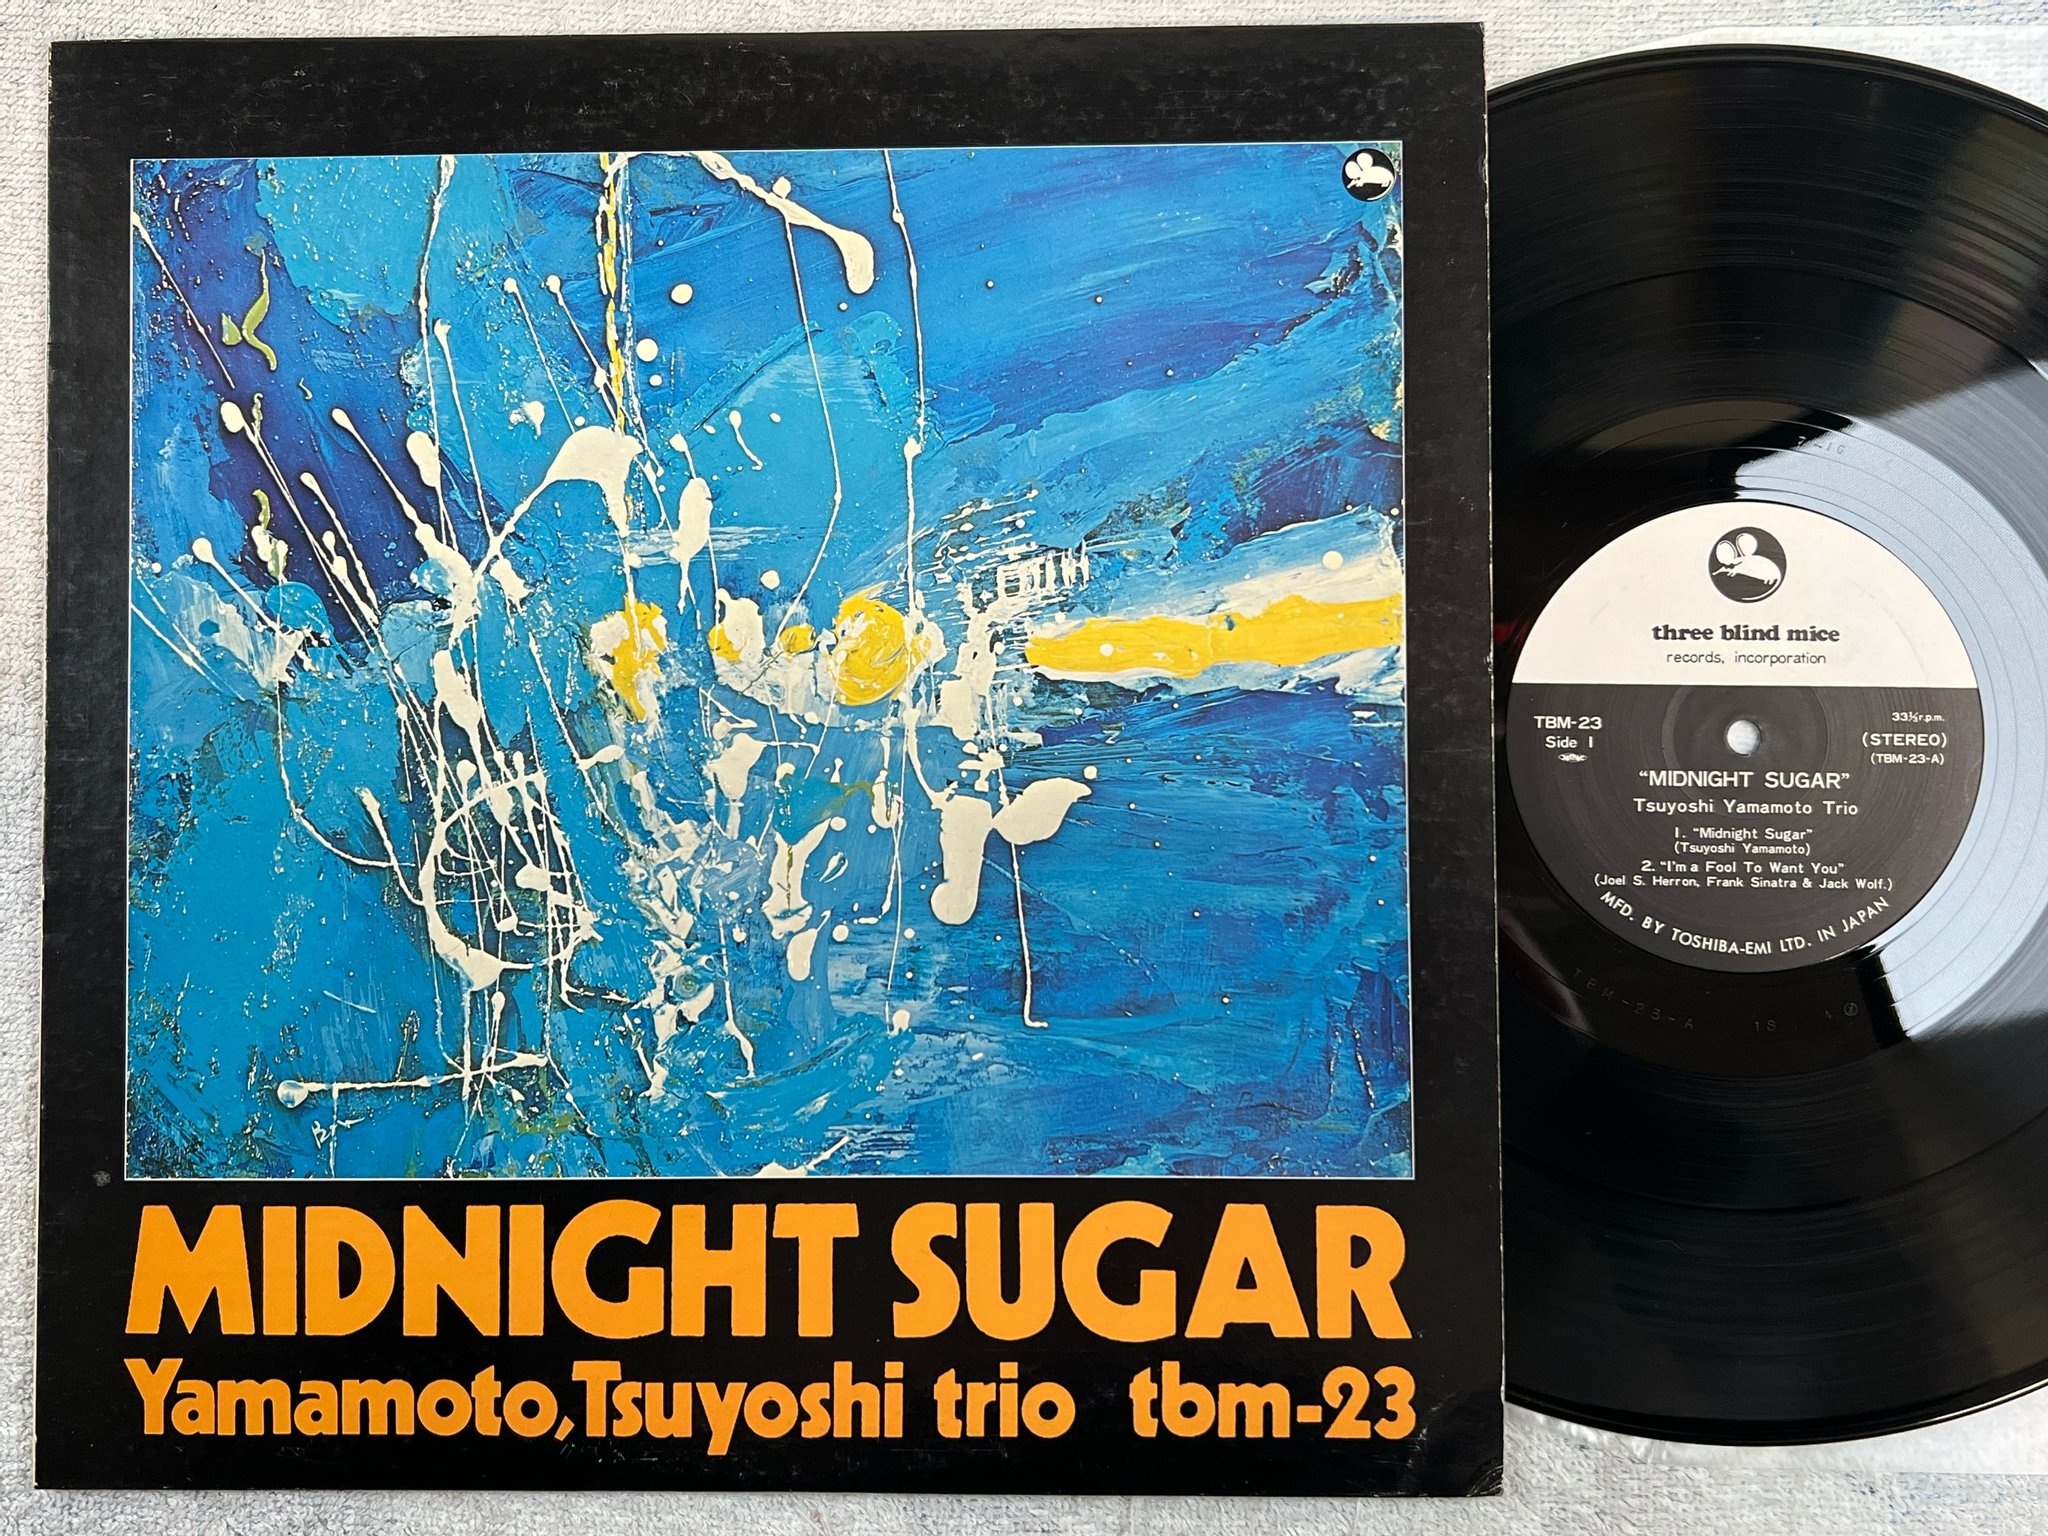 Omslagsbild för skivan YAMAMOTO TSUYOSHI TRIO midnight sugar LP -74 Japan THREE BLIND MICE TBM-23 rare 